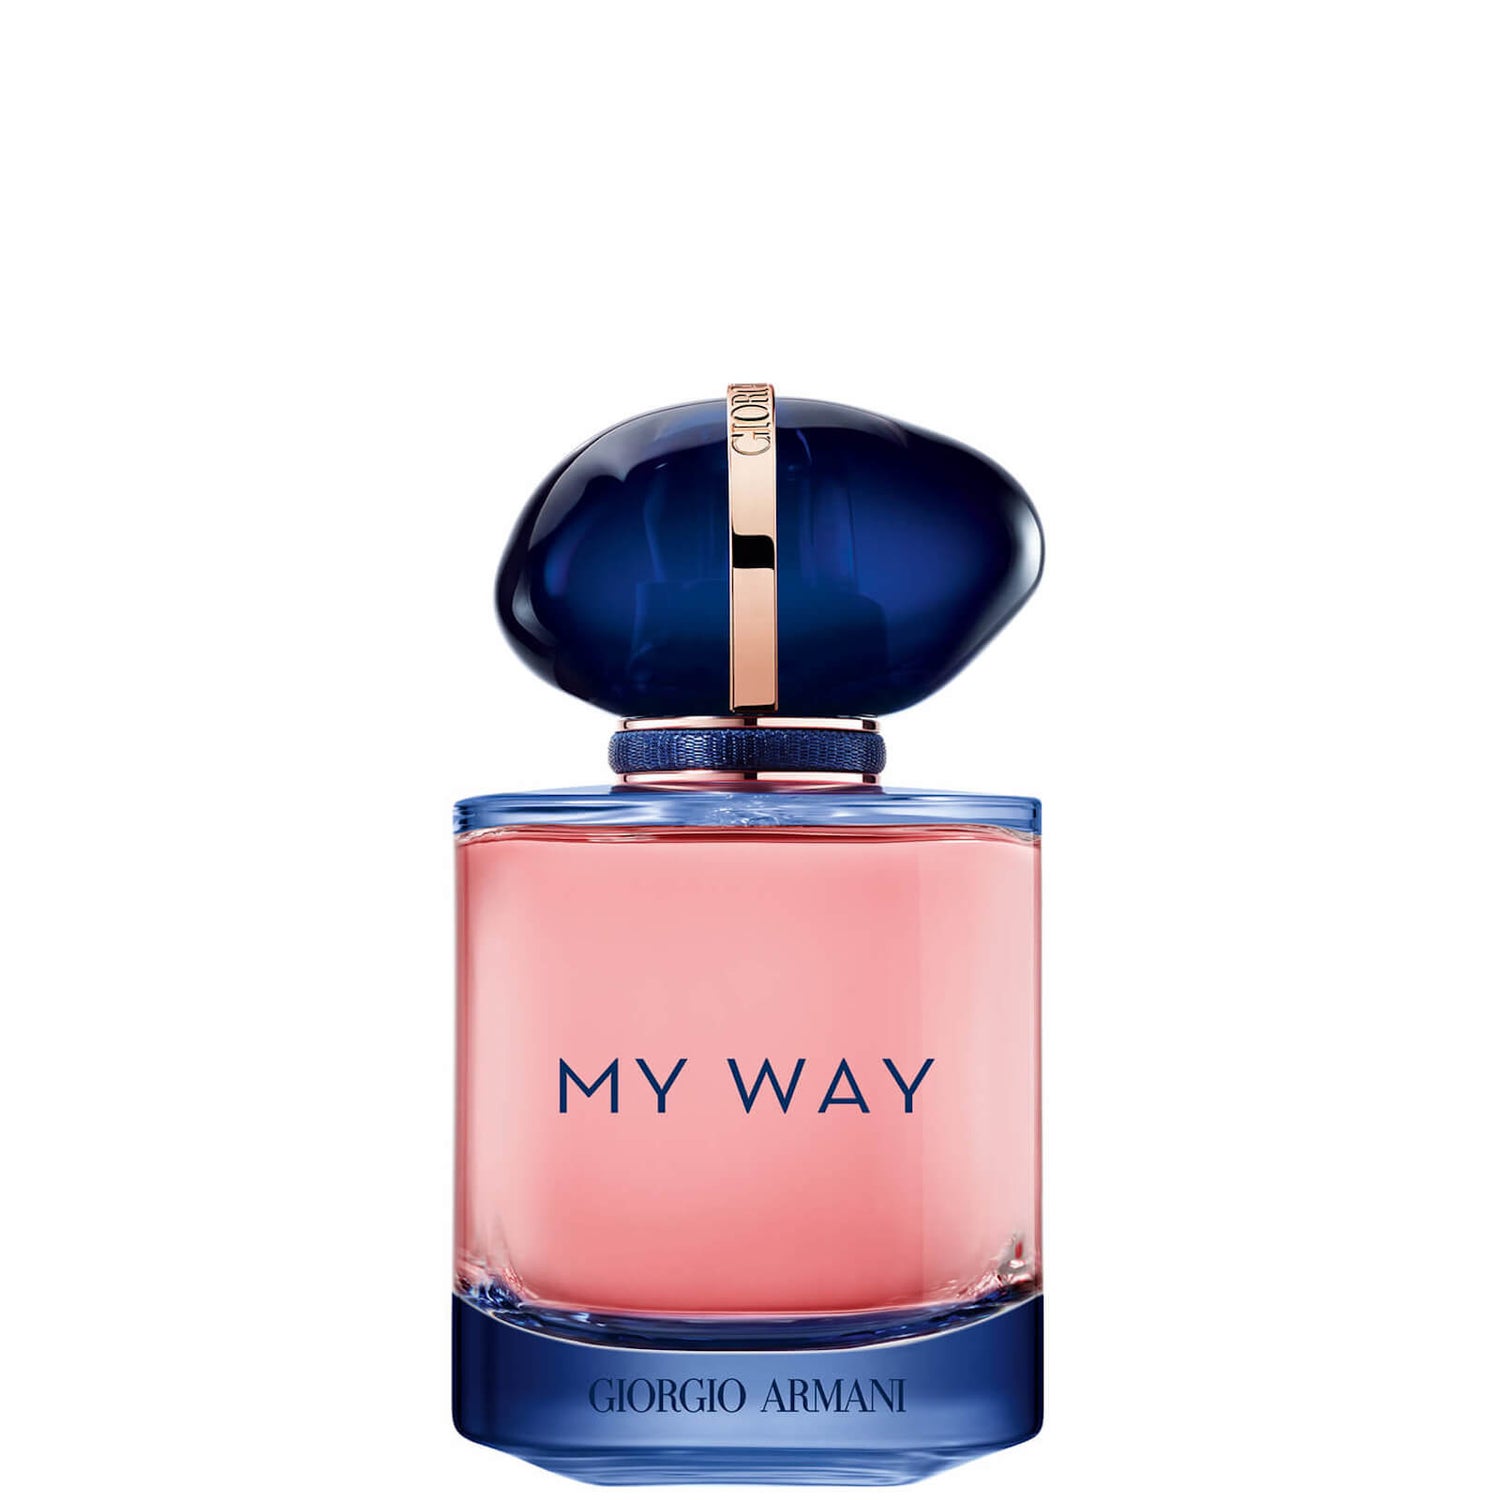 Armani My Way Eau de Parfum Intense - 50ml Armani My Way parfémovaná voda Intense - 50 ml